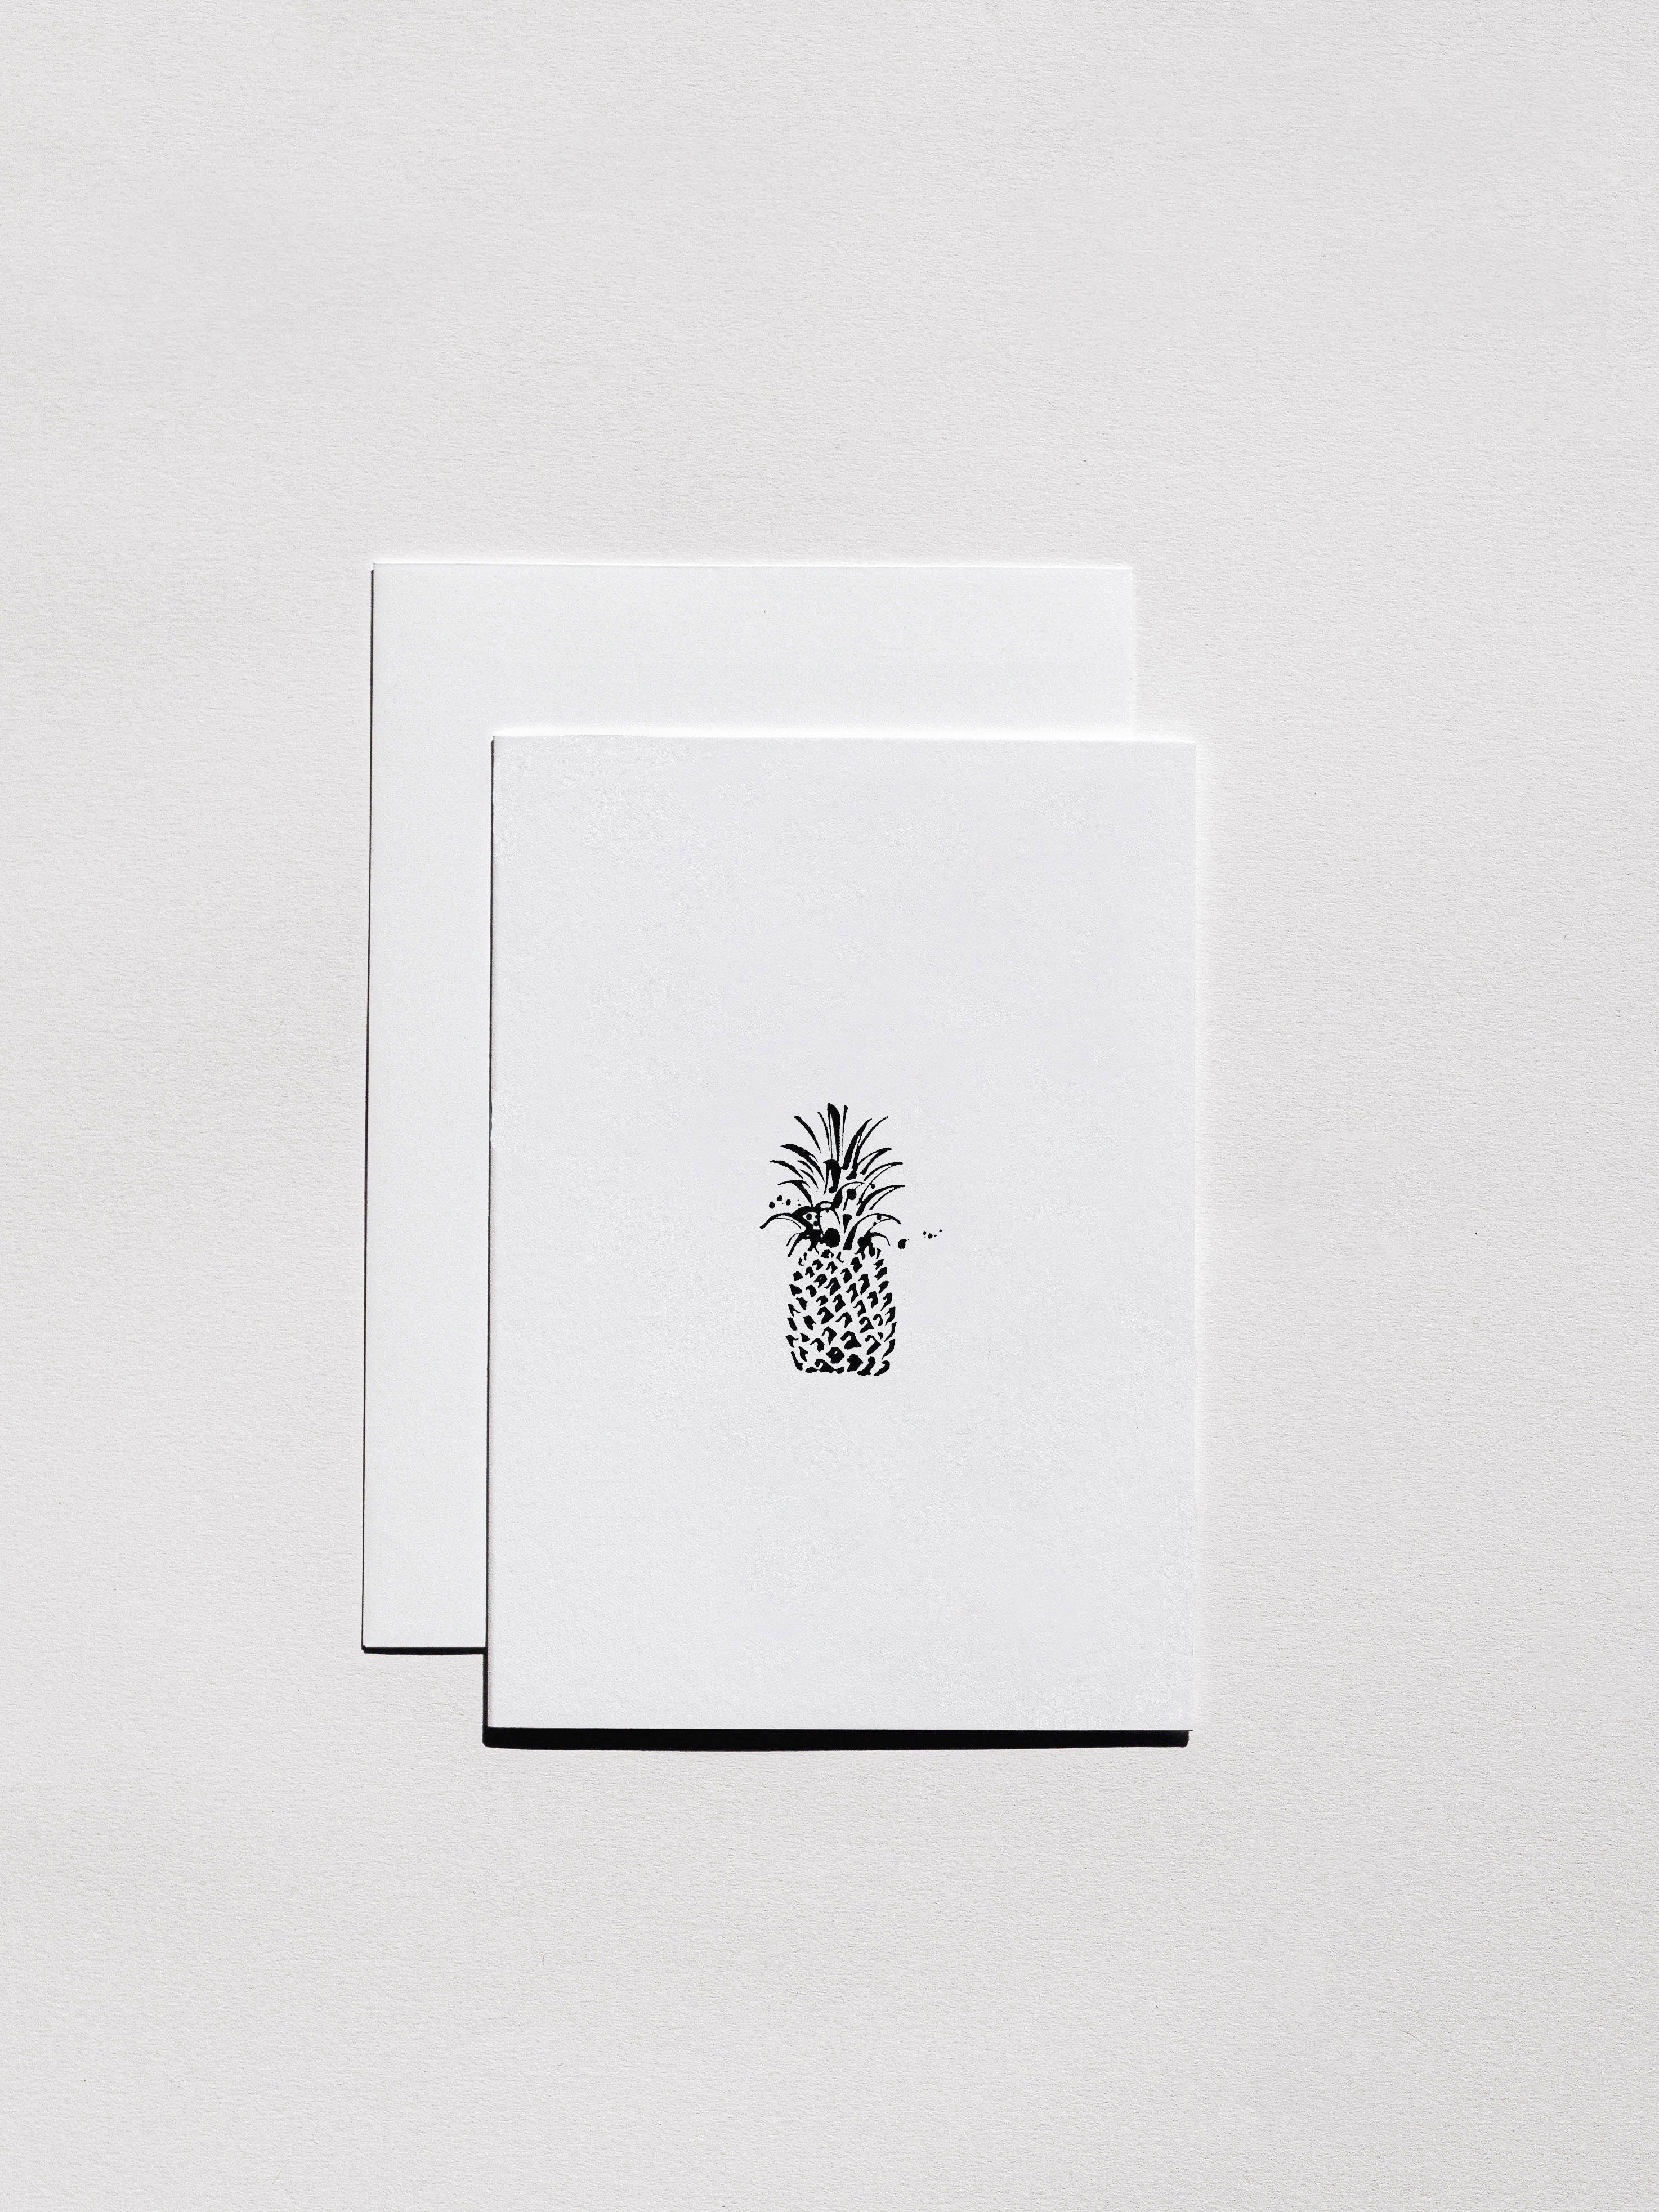 Greeting card - Pineapple, Letterpress